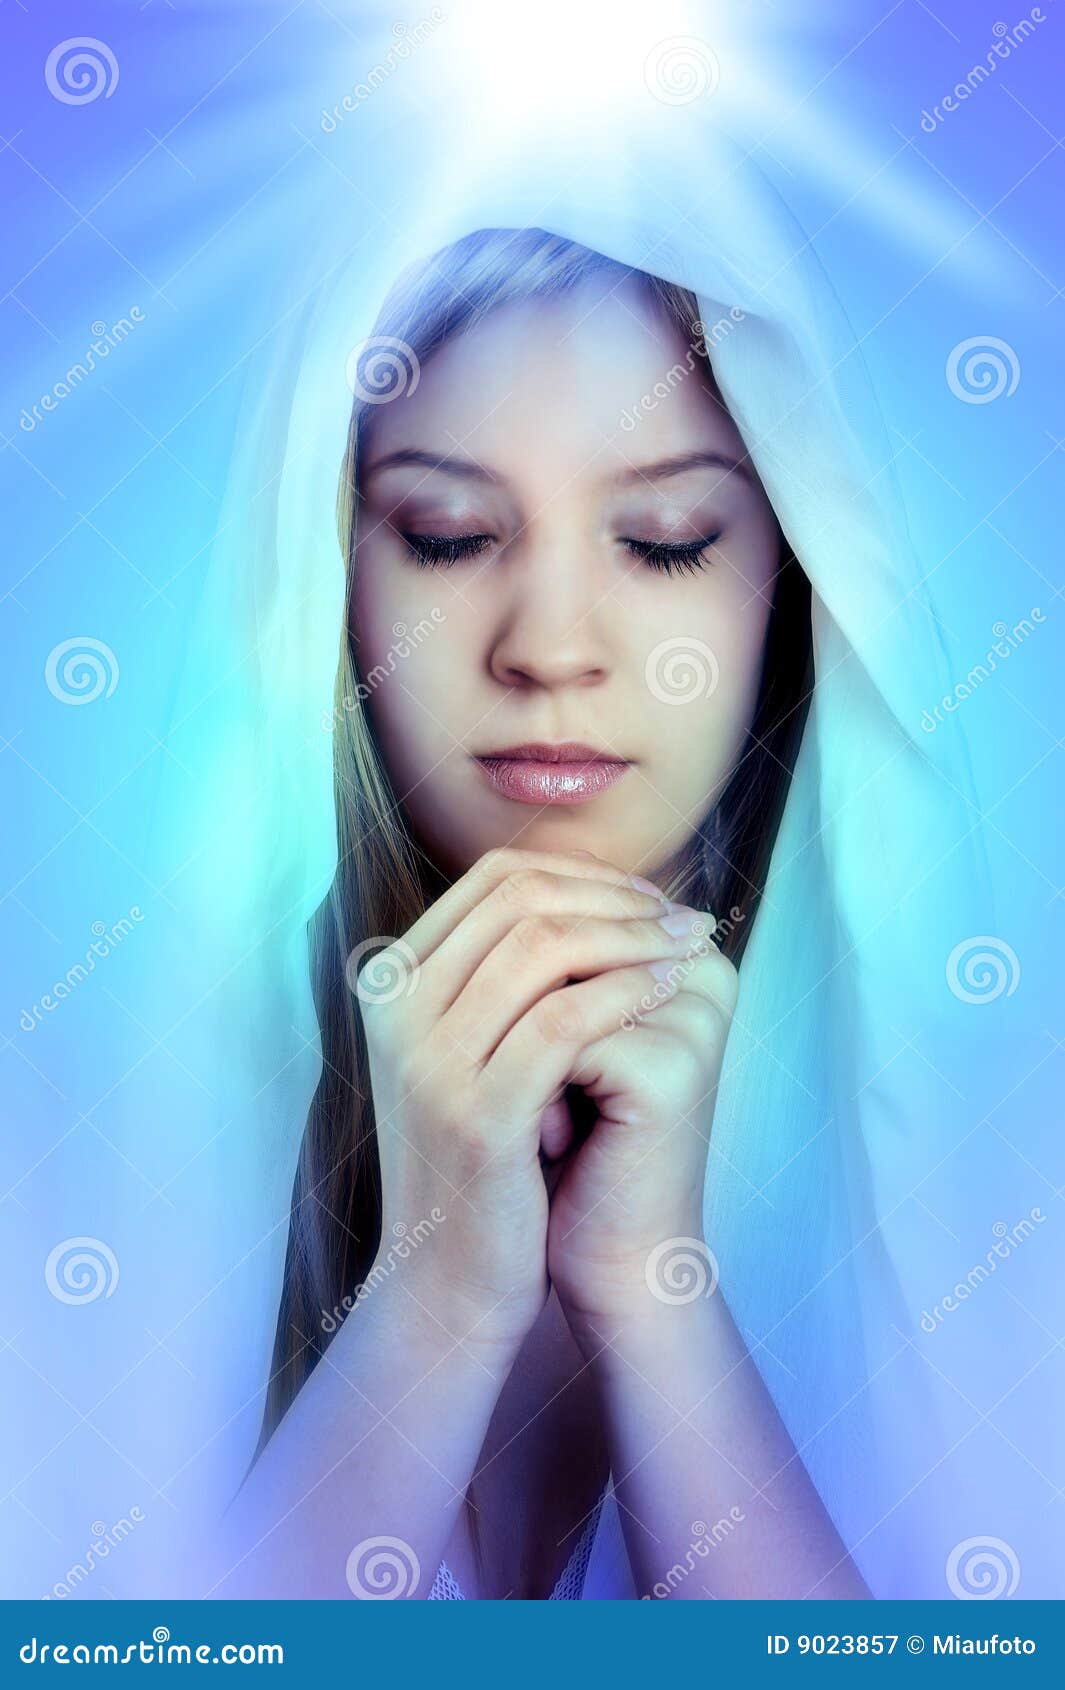 Women Prayer On Blue Background Royalty Free Stock Photography - Image